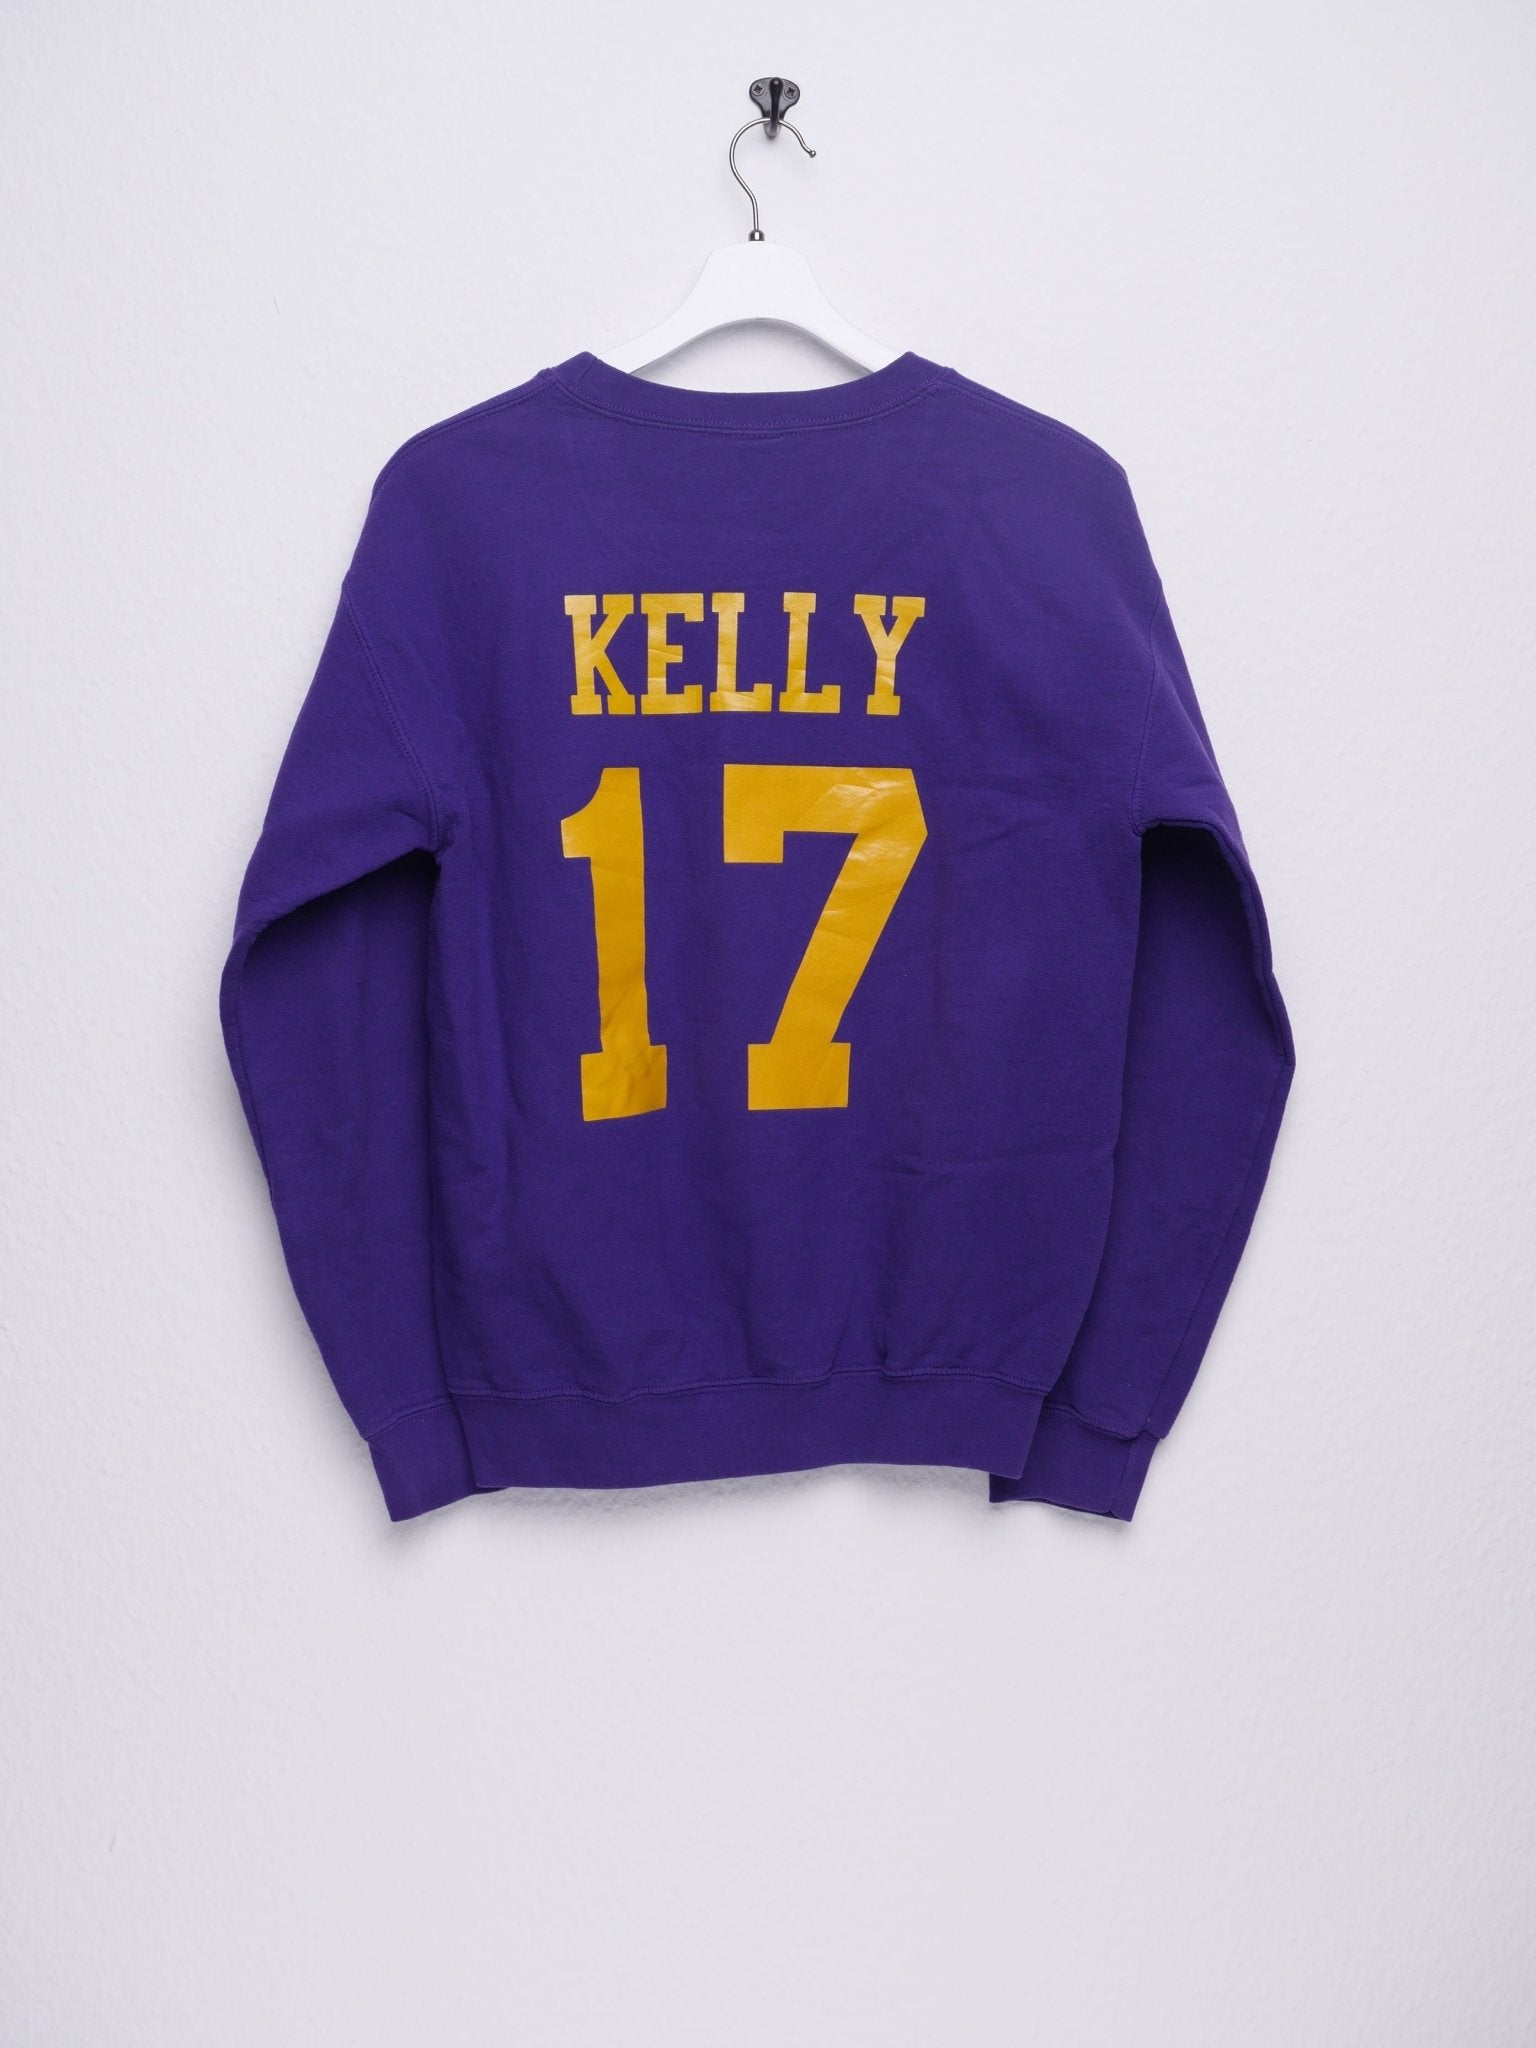 Gildan printed 'Kearney Gilrs Soccer' Sweater - Peeces